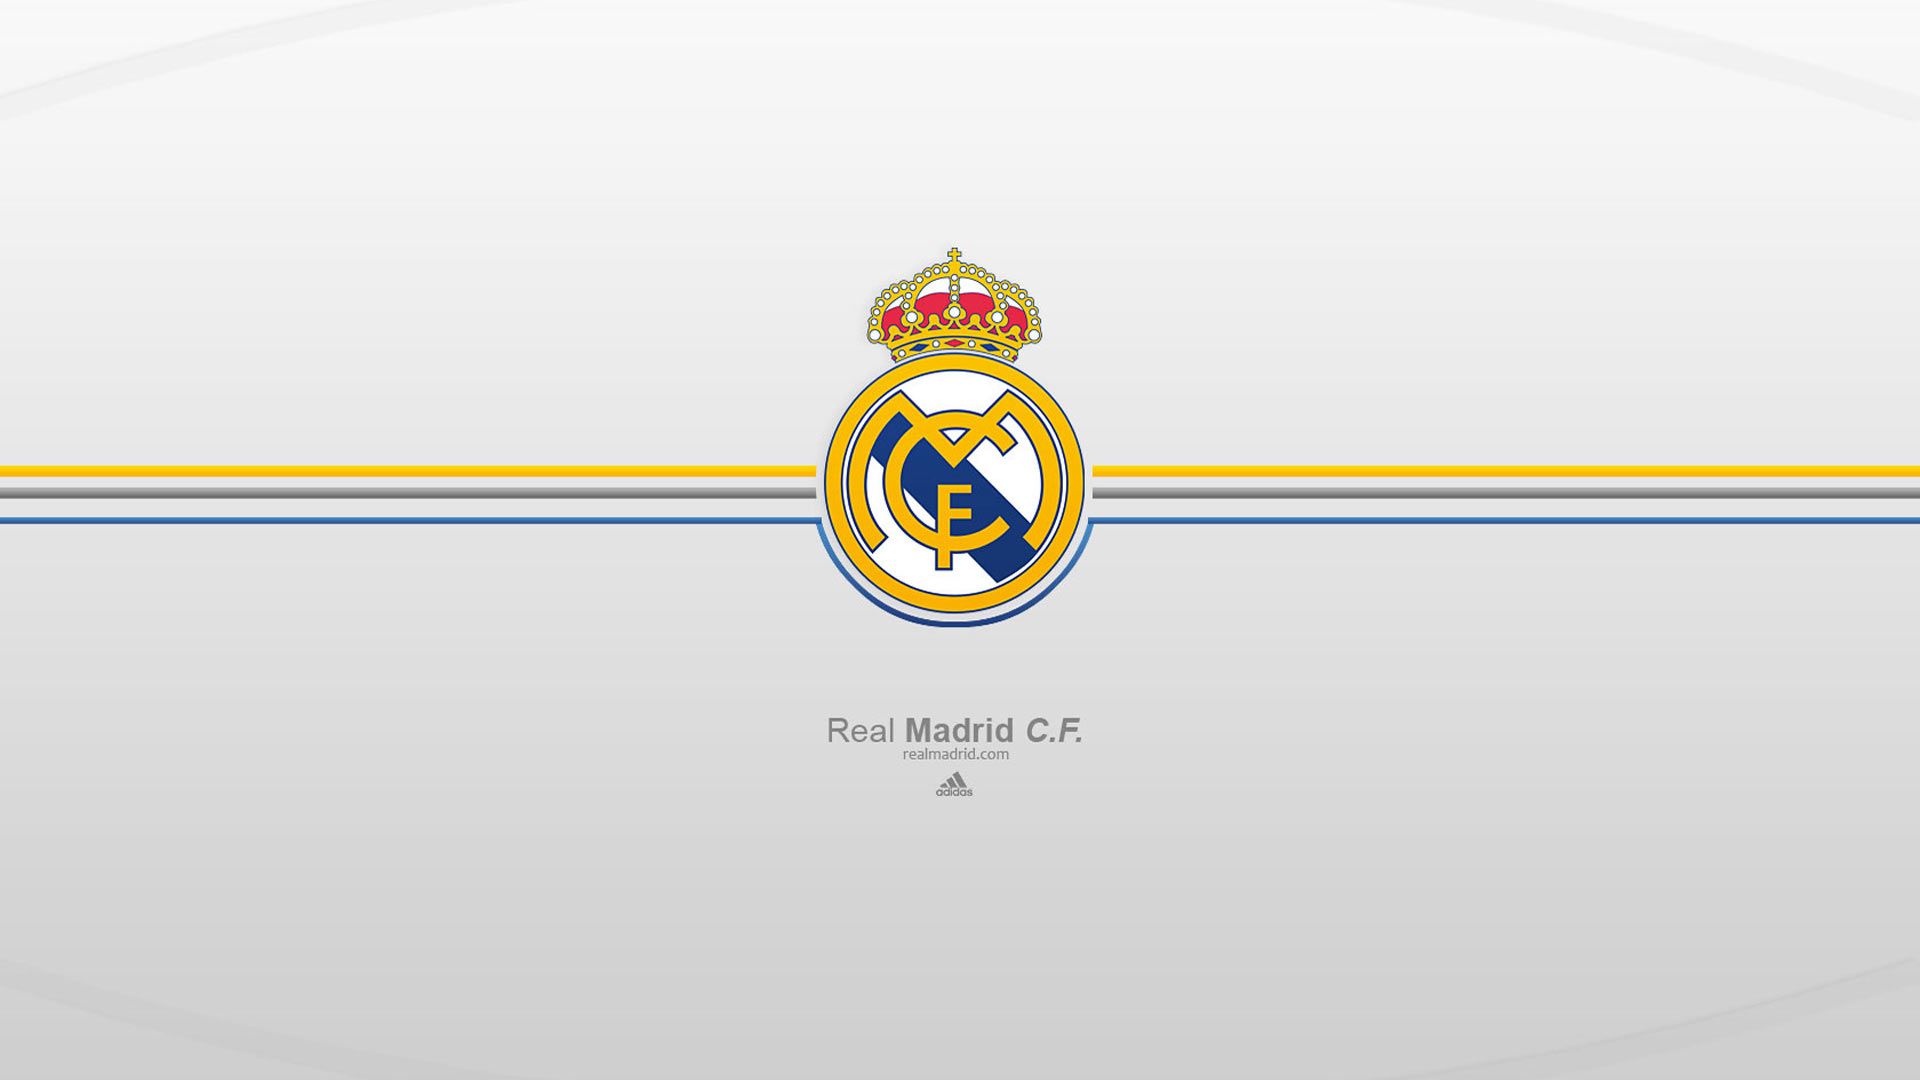 Real Madrid Hintergrundbild 1920x1080. Free download Real Madrid CF high definition widescreen desktop wallpaper [1920x1080] for your Desktop, Mobile & Tablet. Explore Real Madrid Fc Wallpaper. Real Madrid Background, Real Madrid Wallpaper, Real Madrid Background